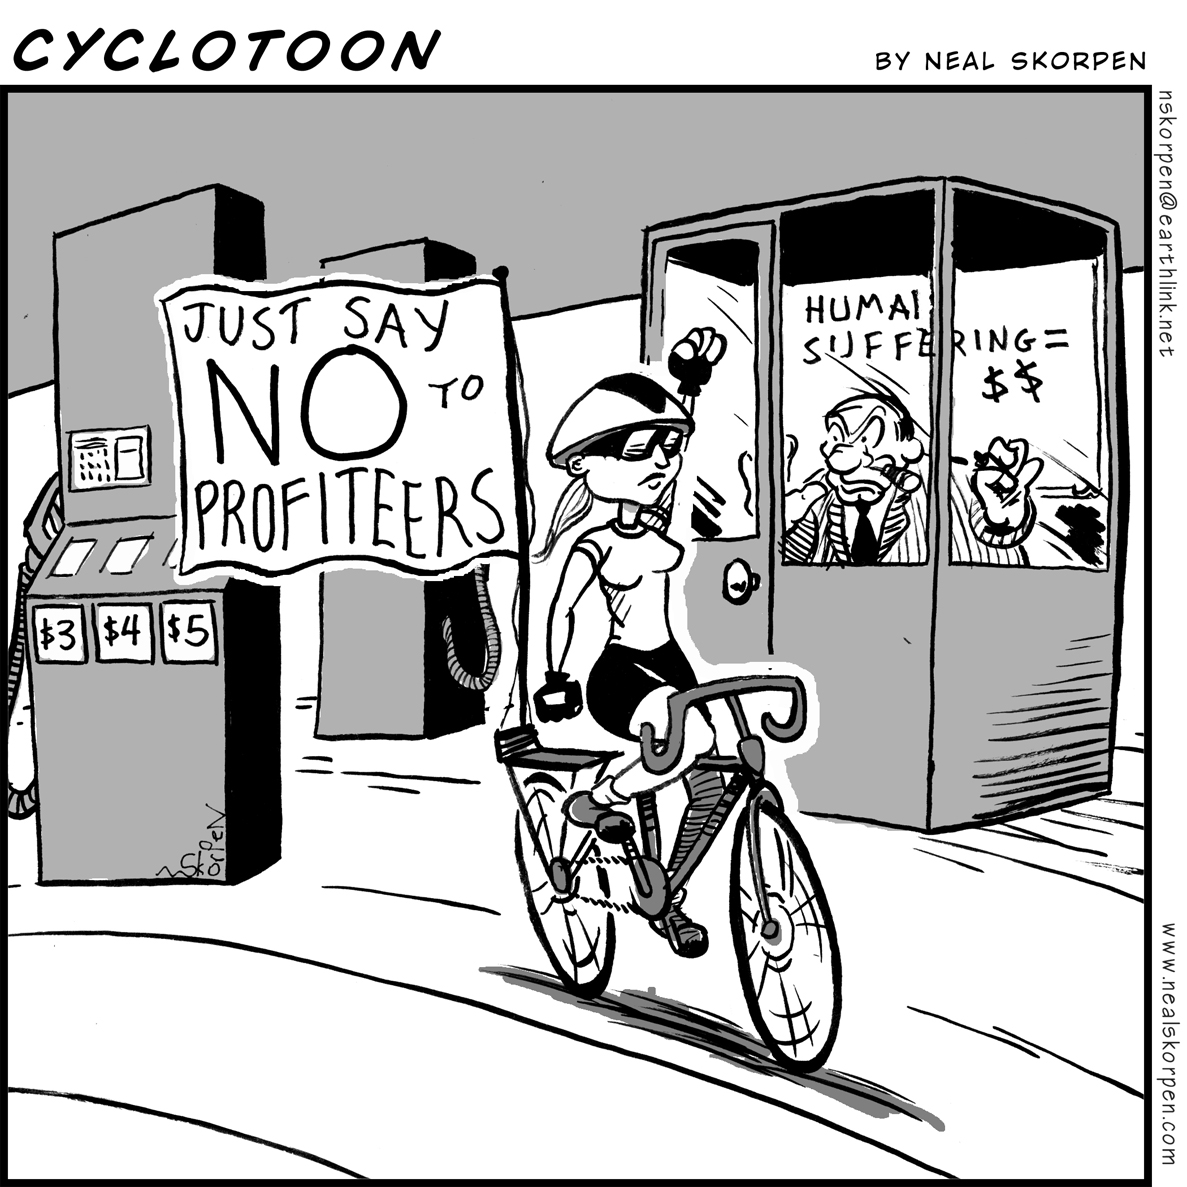 Cyclotoon: Just Say No to Profiteers, by Neal Skorpen